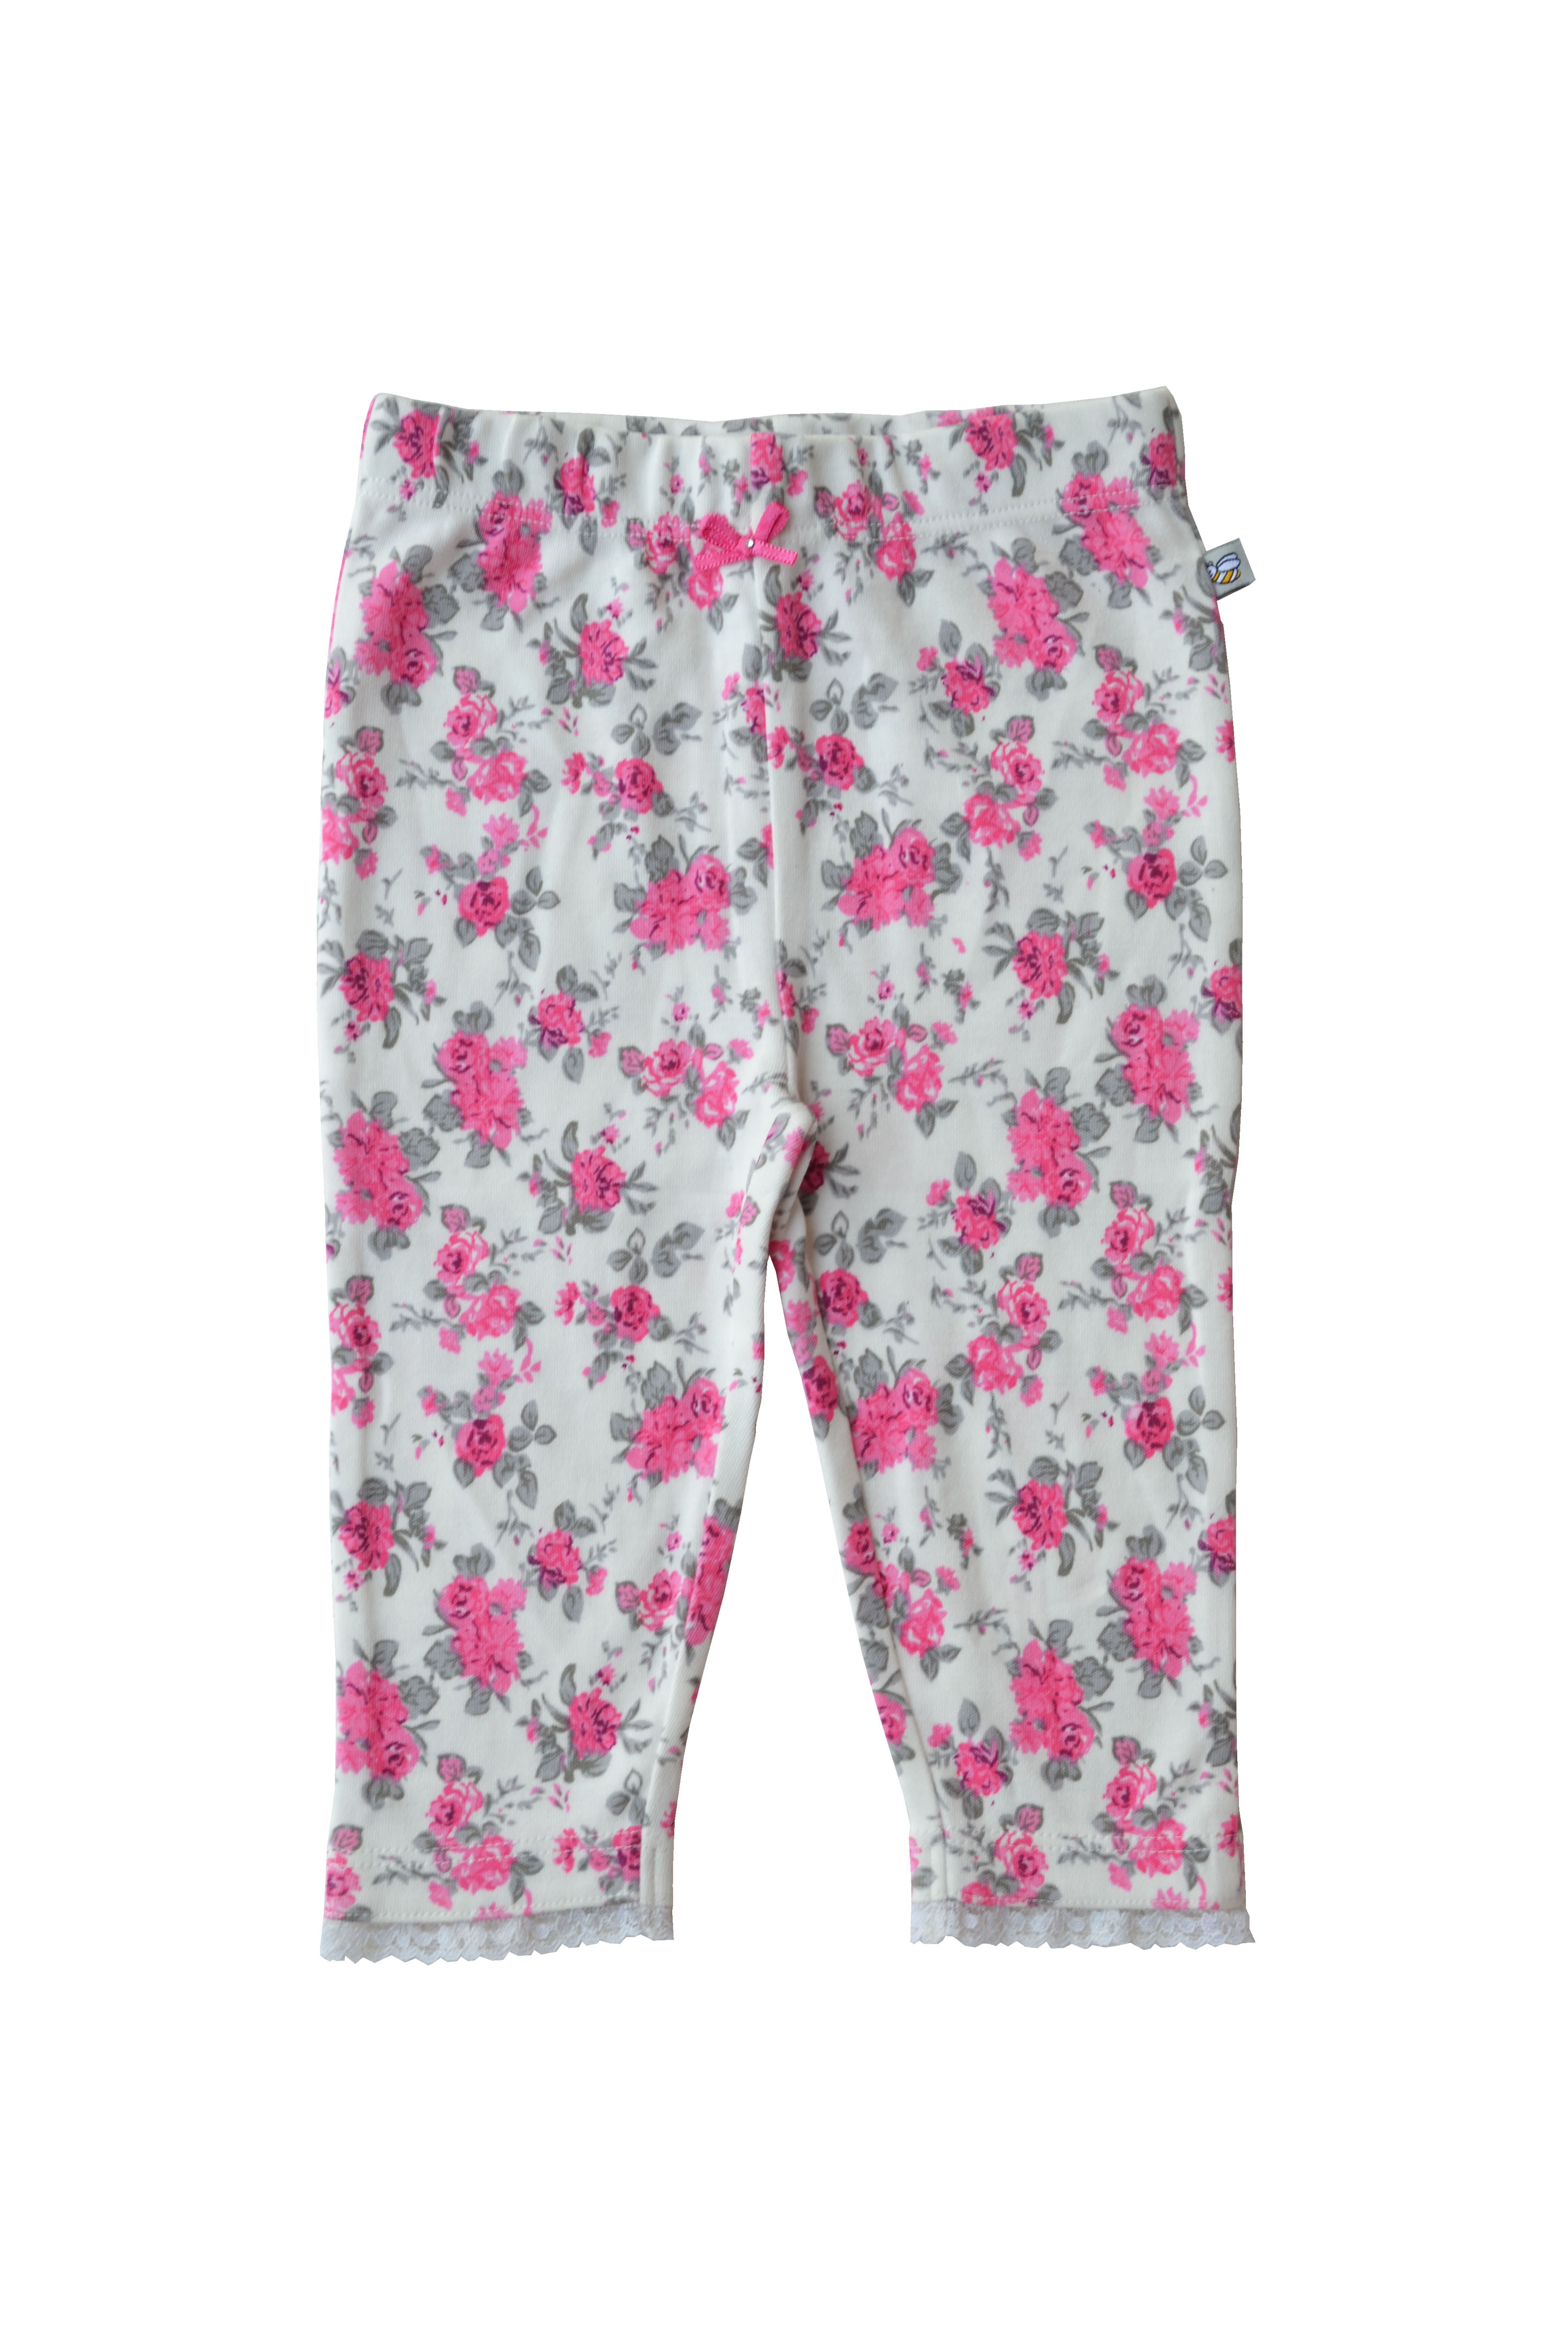 Girls Cream Leggings with Pink Roses (95% Cotton 5%Elasthan Jersey)